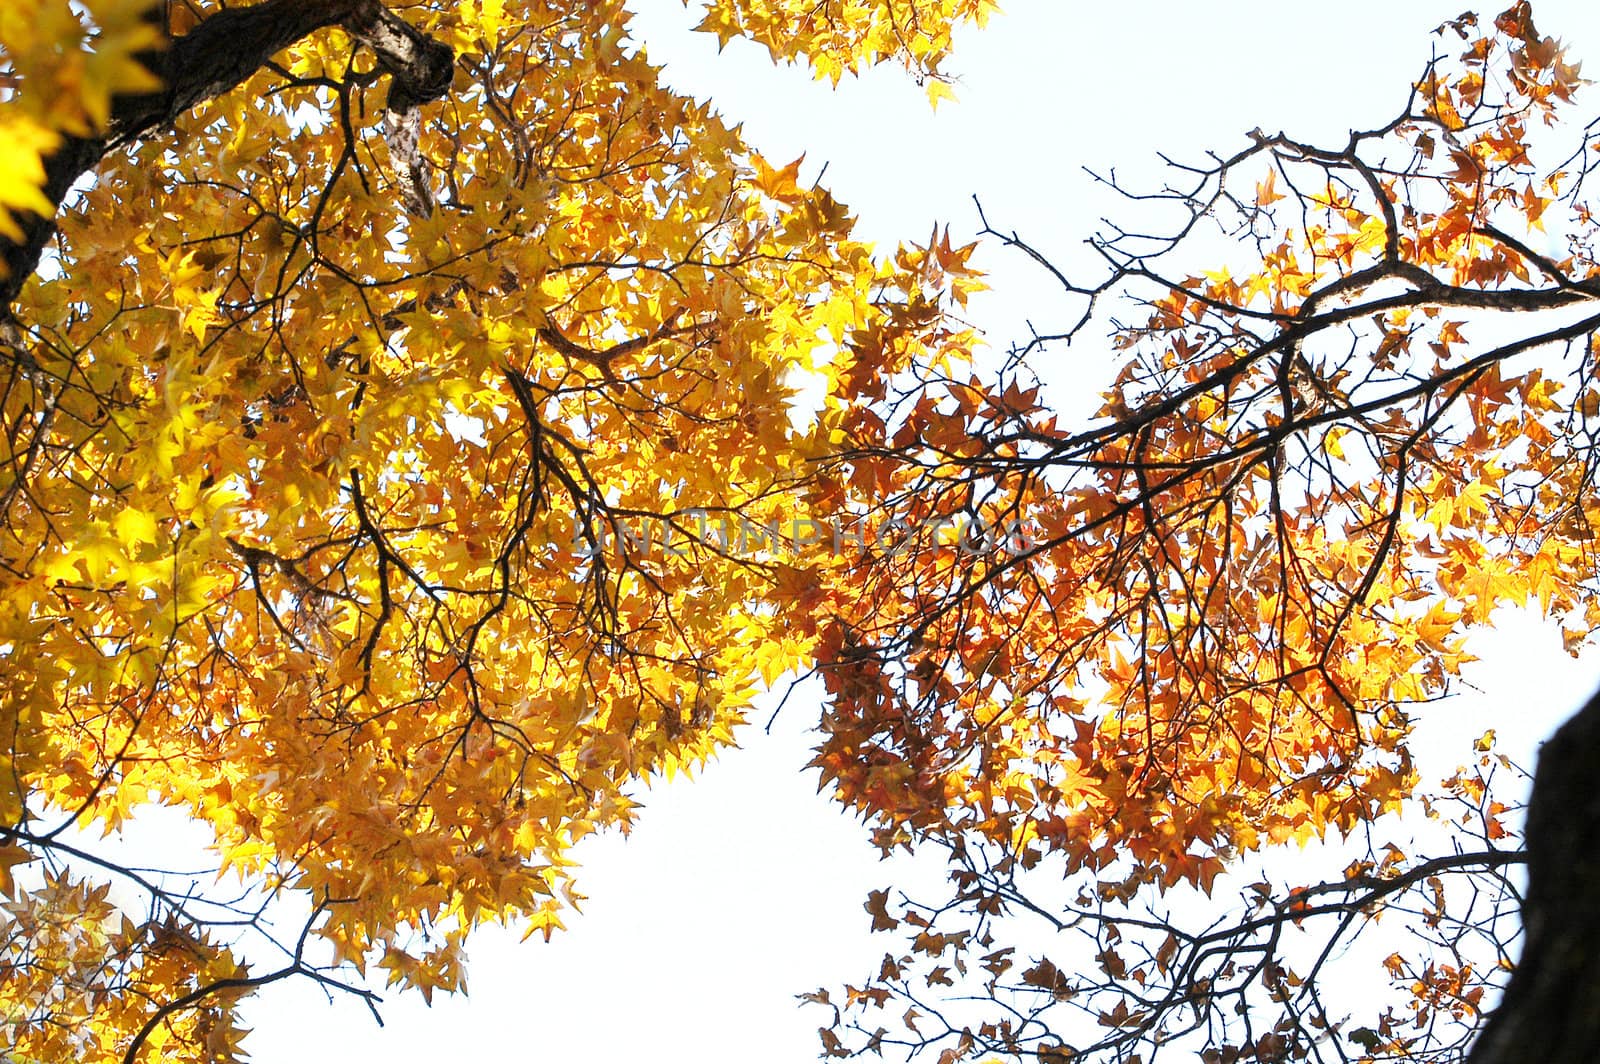 Golden autumn leaves